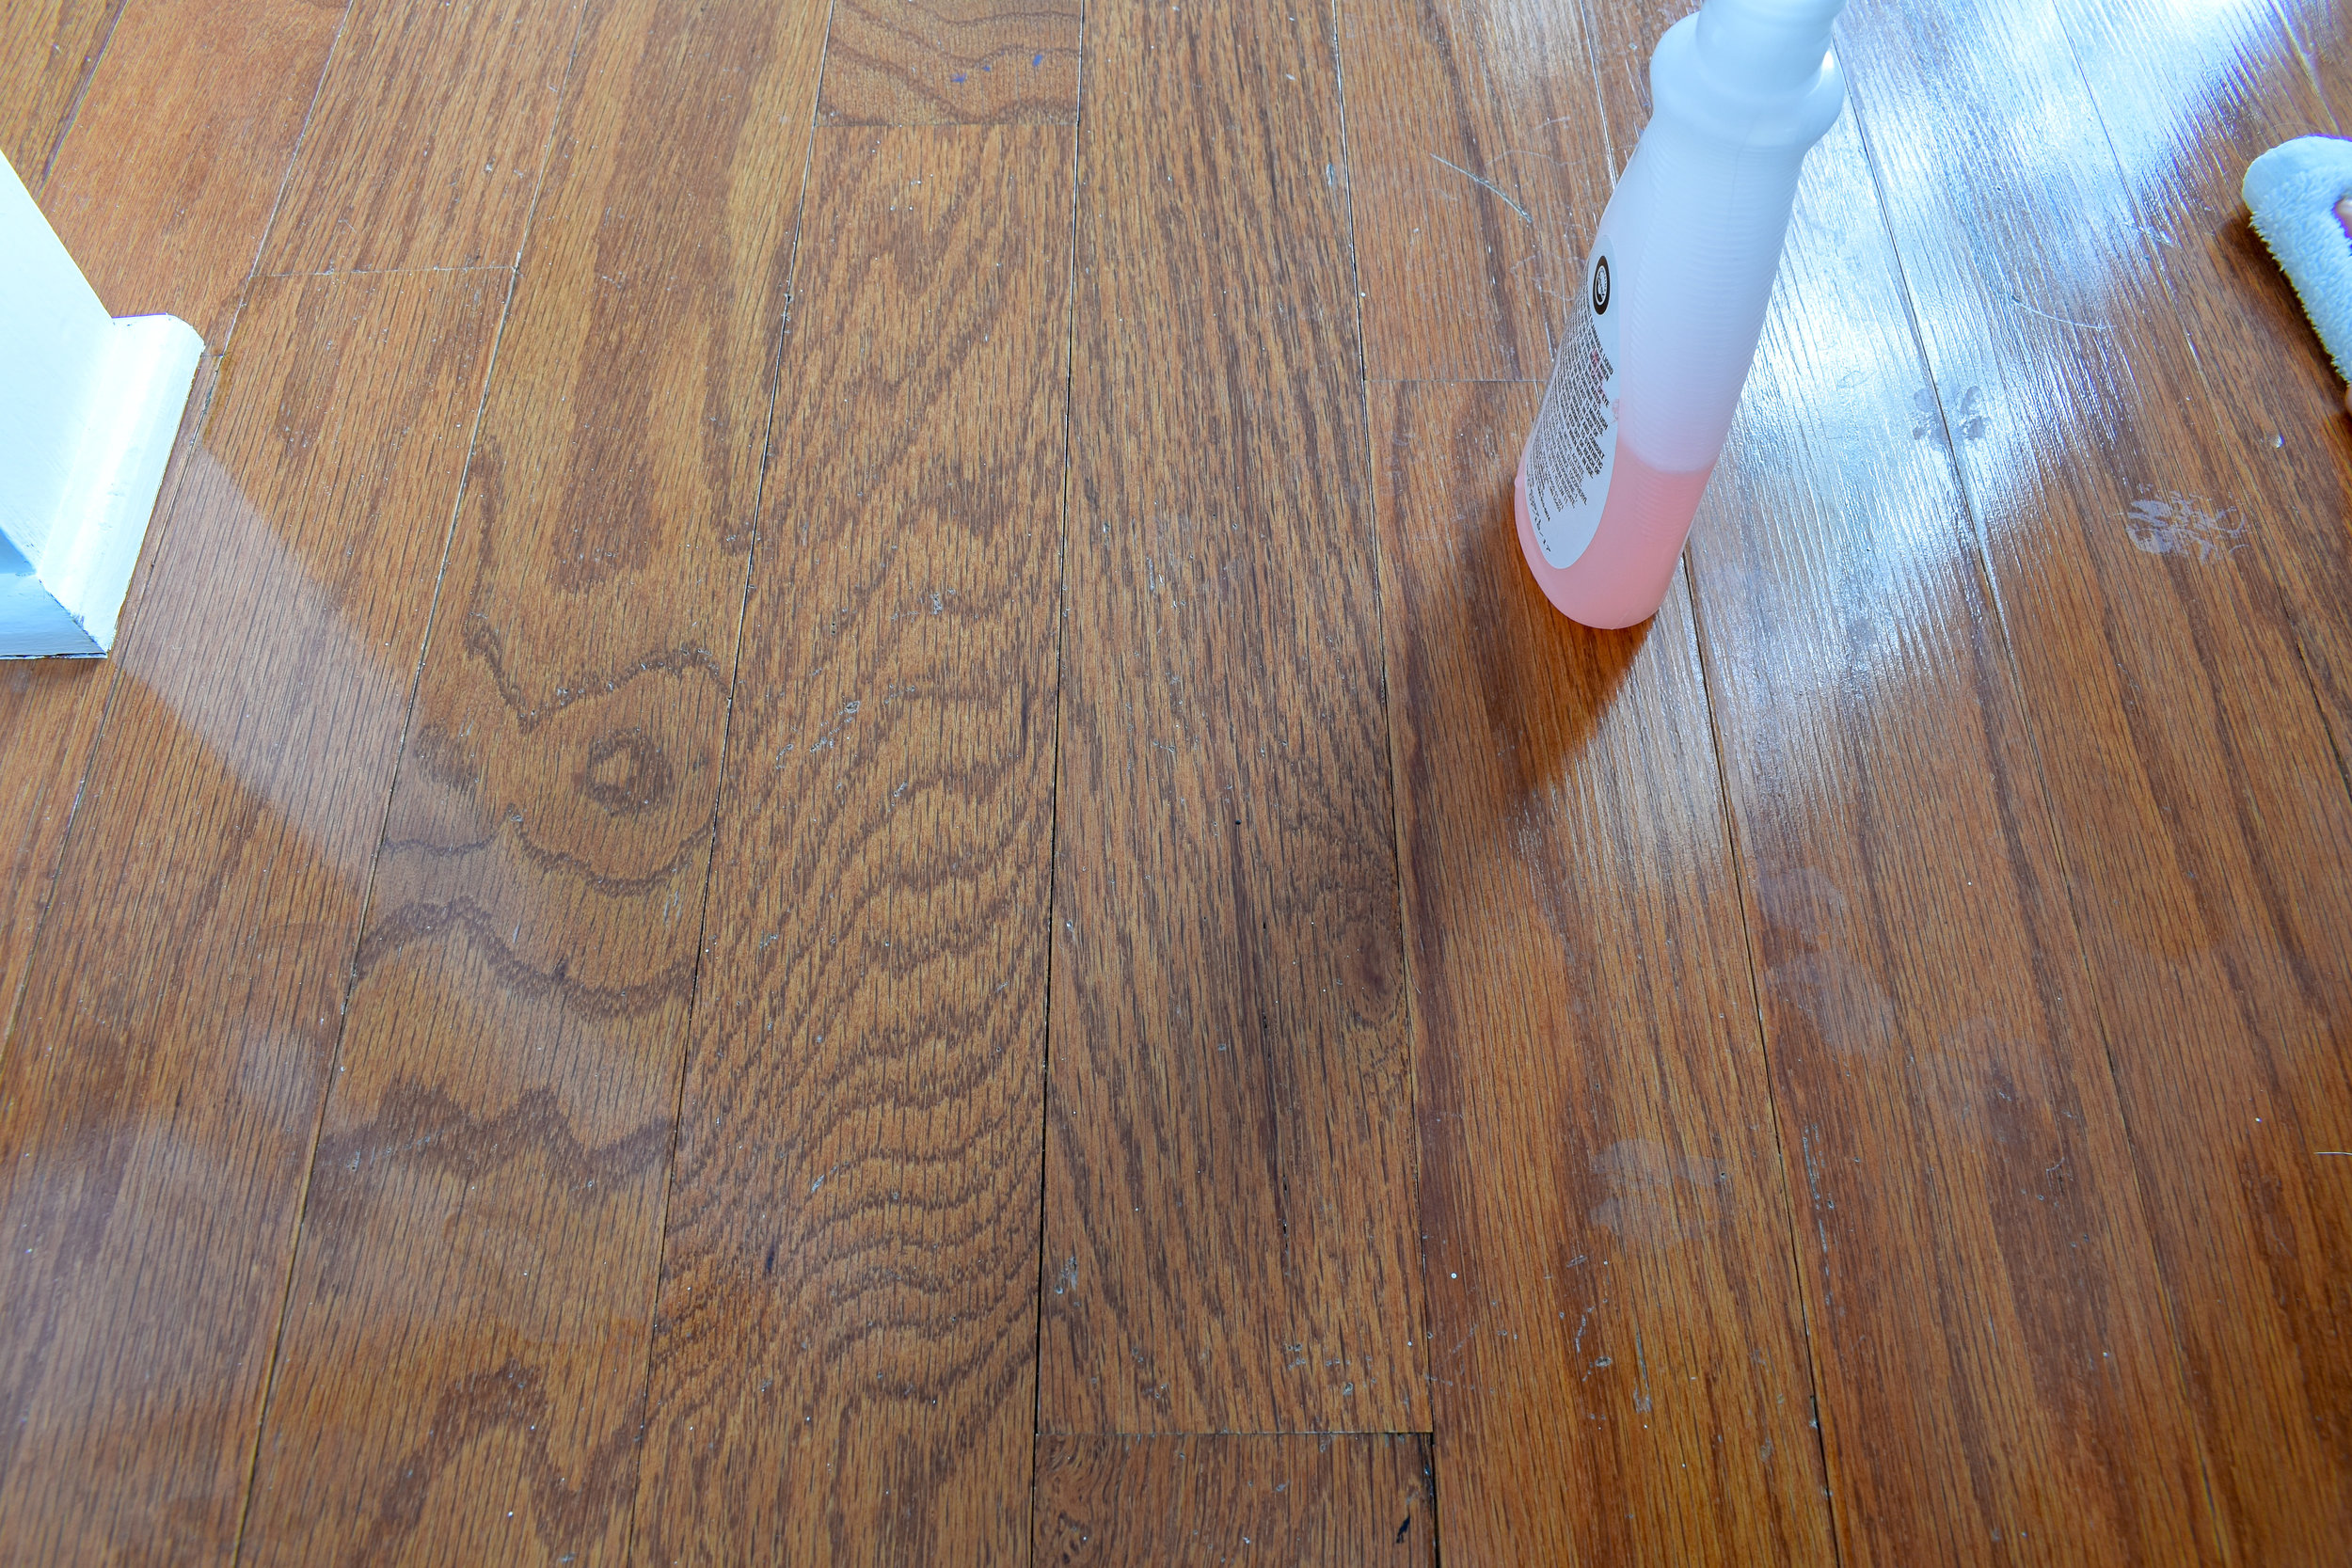 How To Make Old Hardwood Floors Shine, How To Clean Old Hardwood Floors